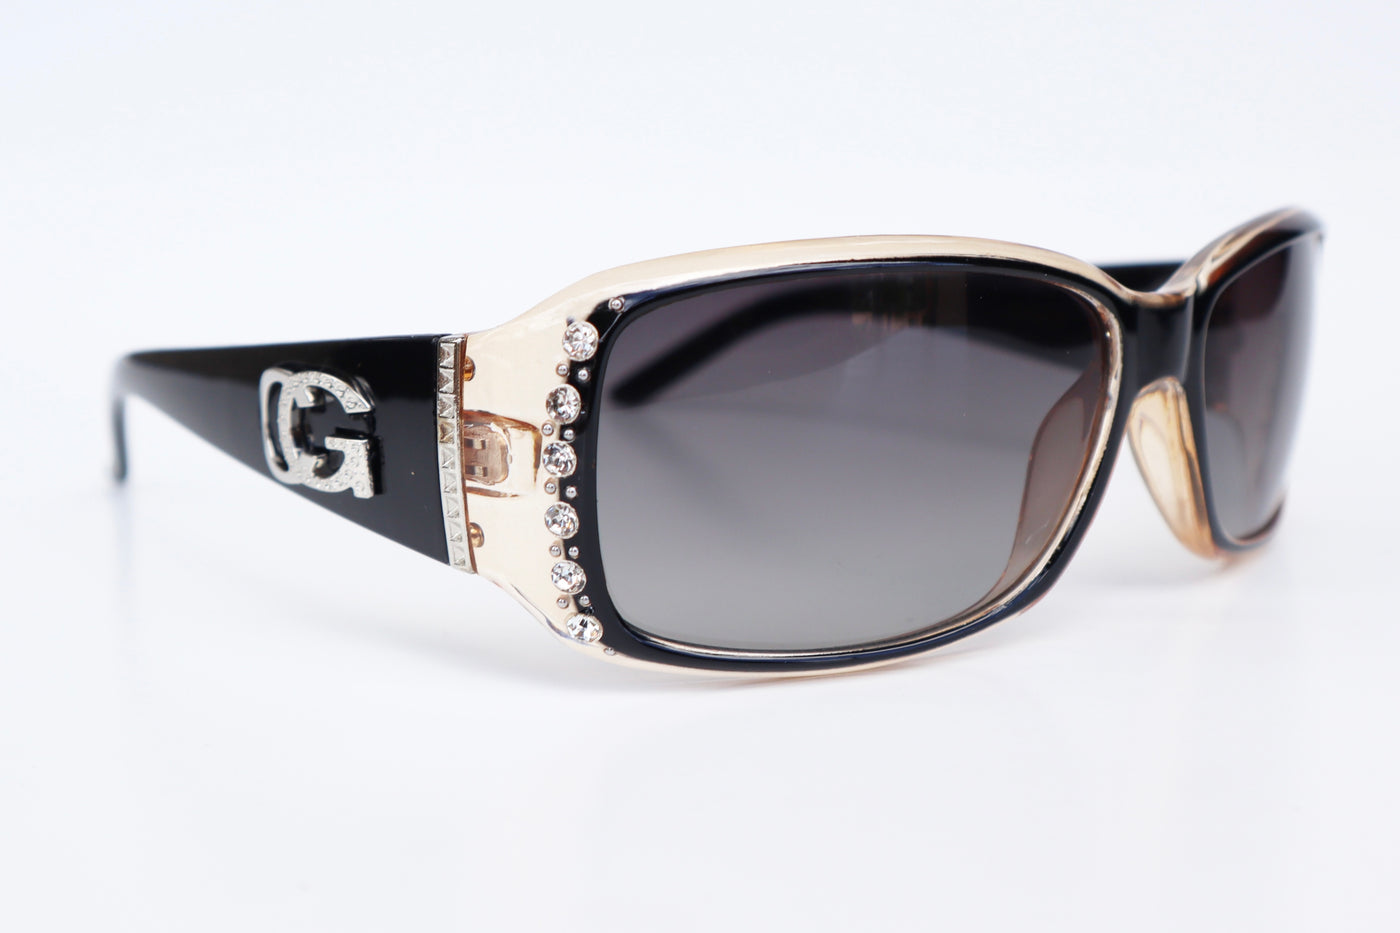 VG Luxury Rhinestone Sunglasses Translucent Champagne Gold Frame with Black Lens